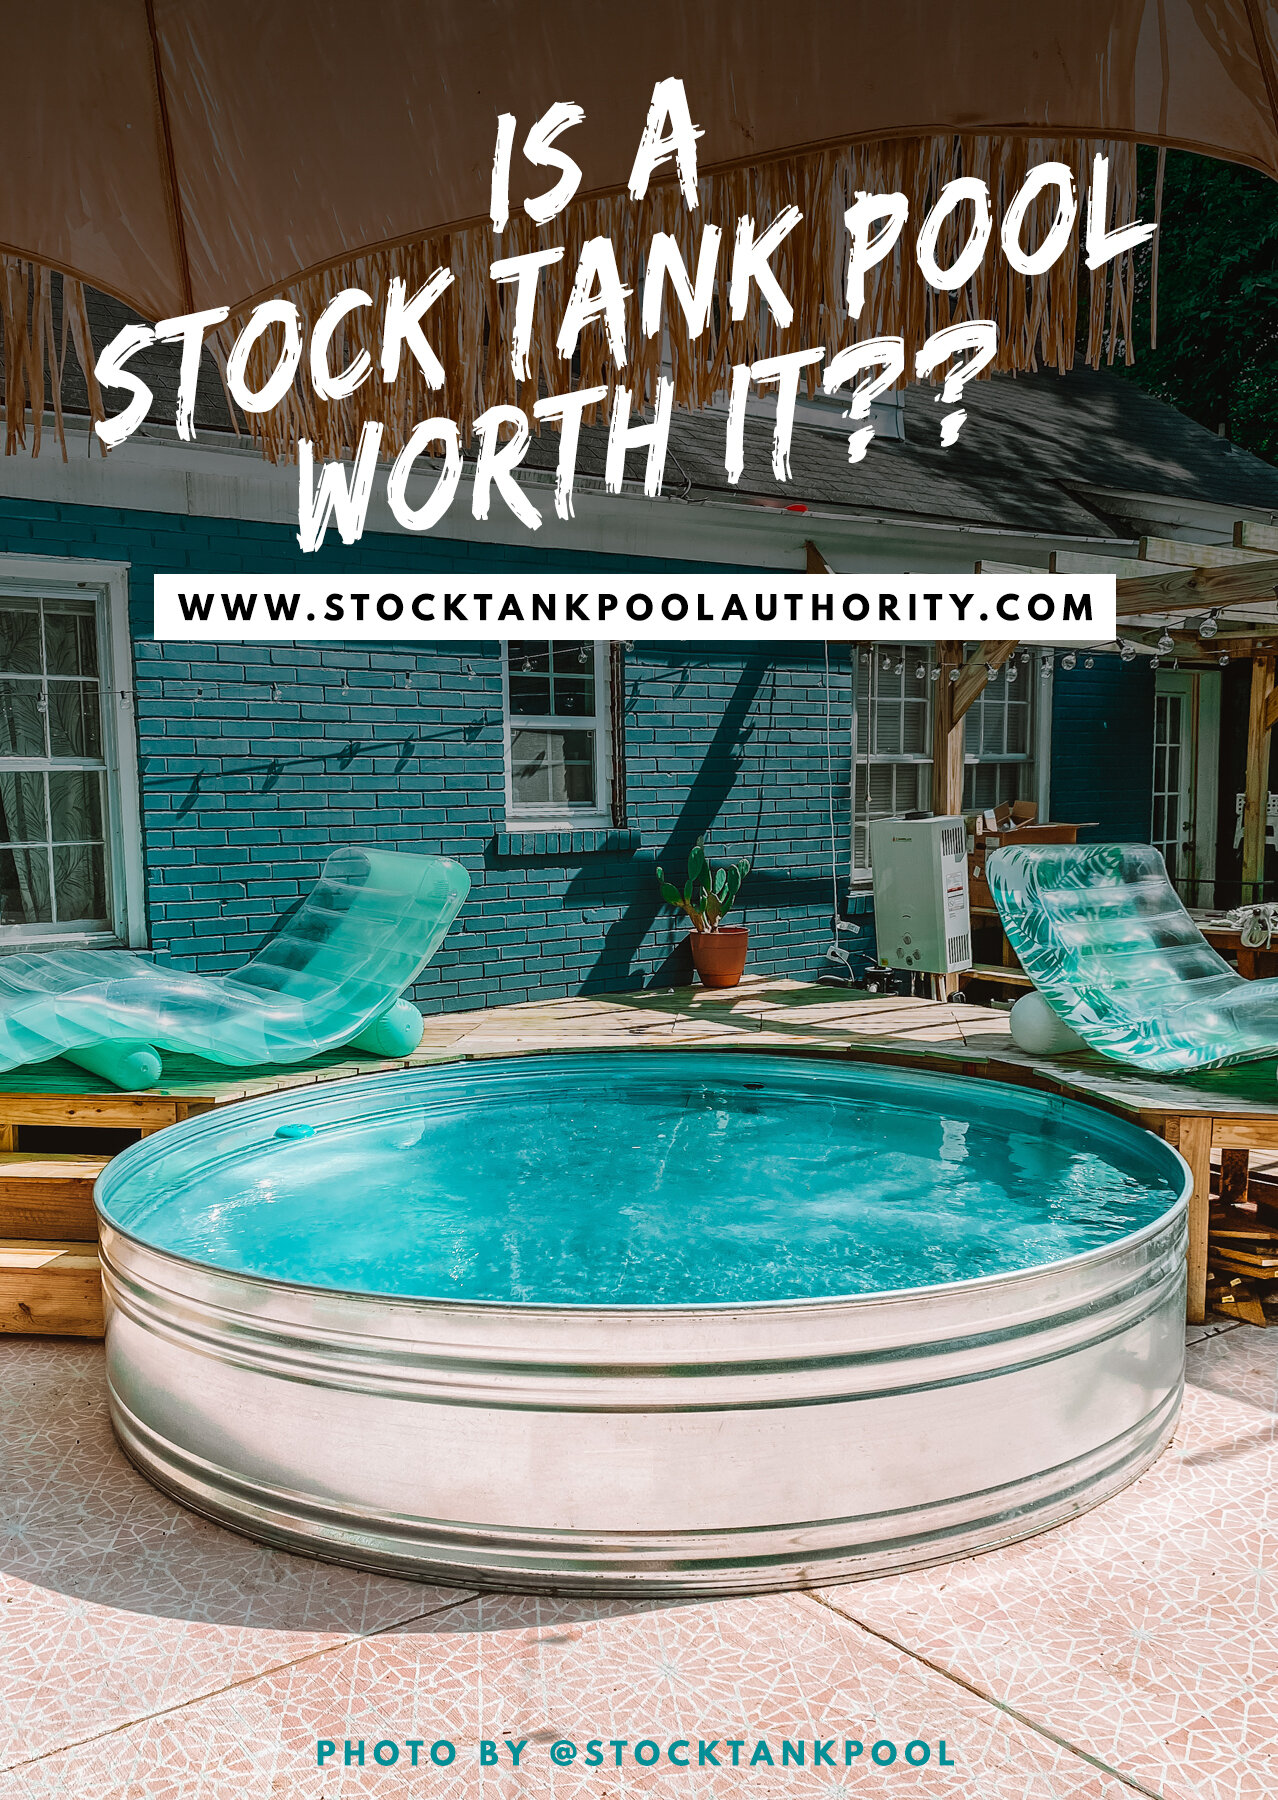 Stock Tank Pool Authority Worth It.jpg